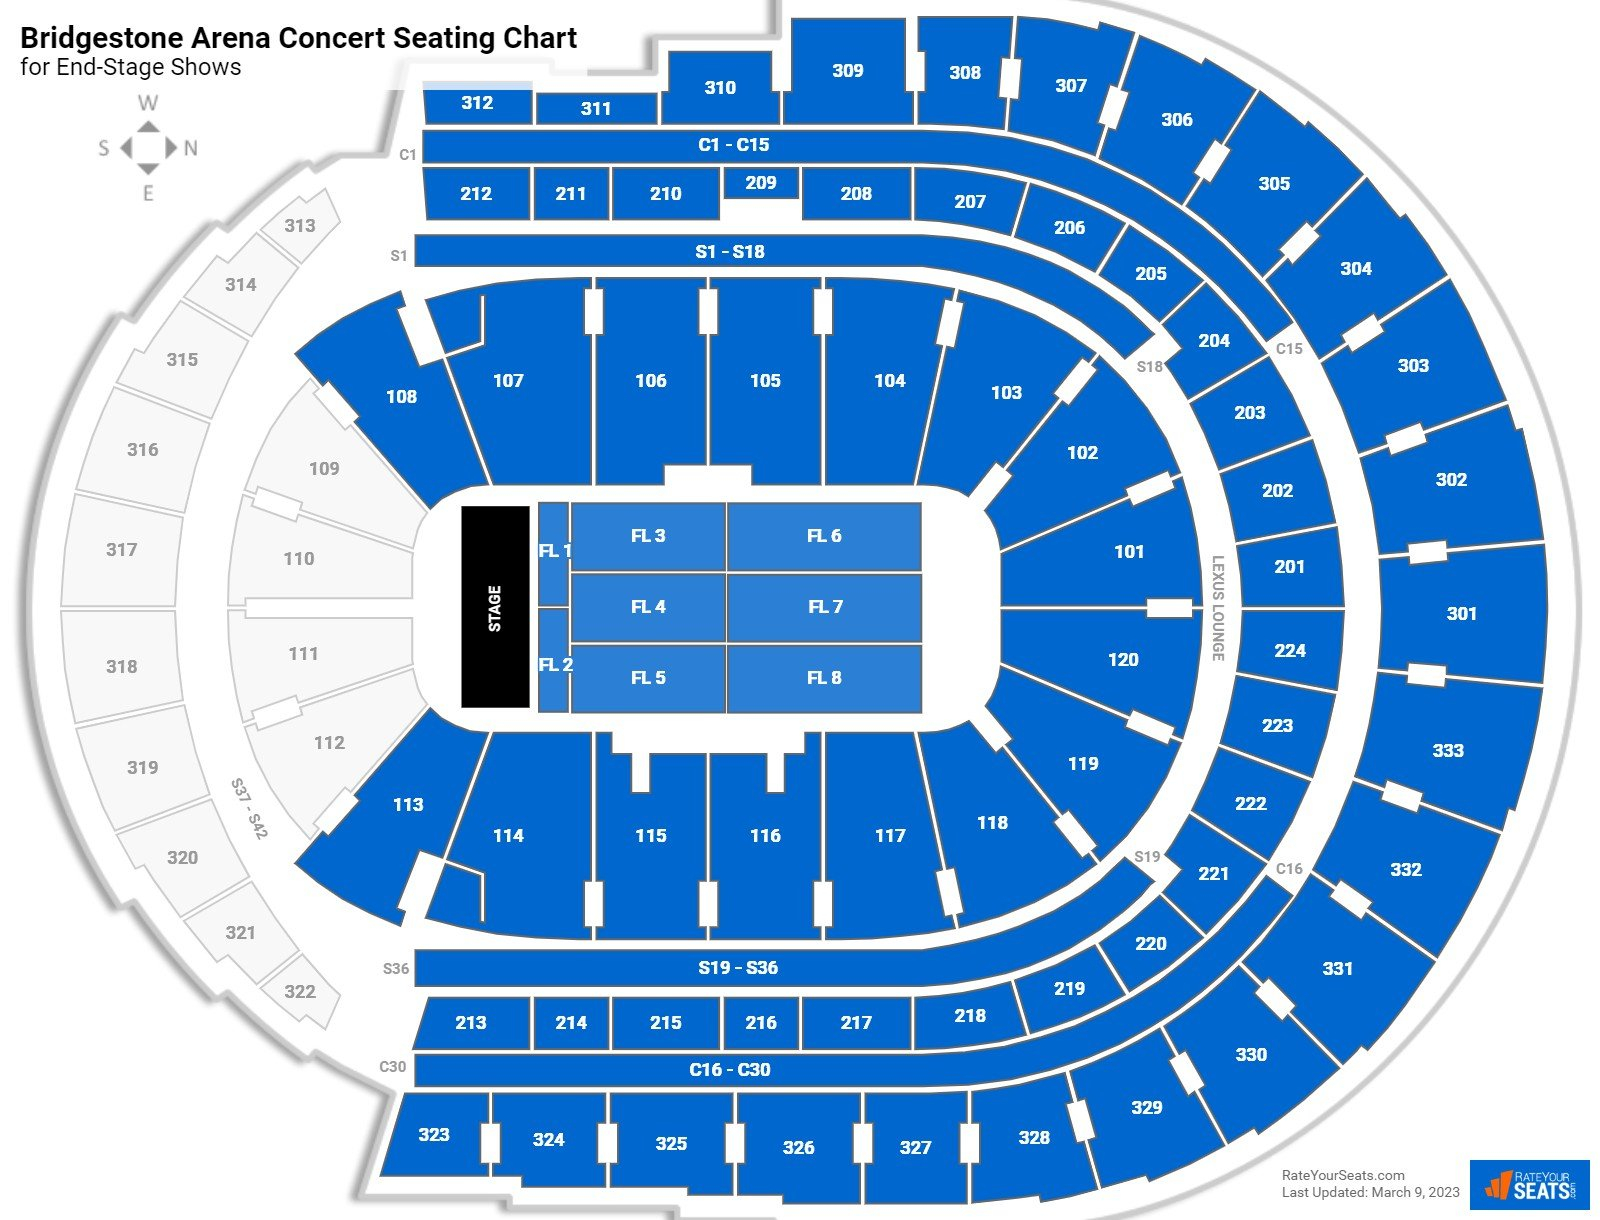 Bridgestone Arena Seating Charts RateYourSeats